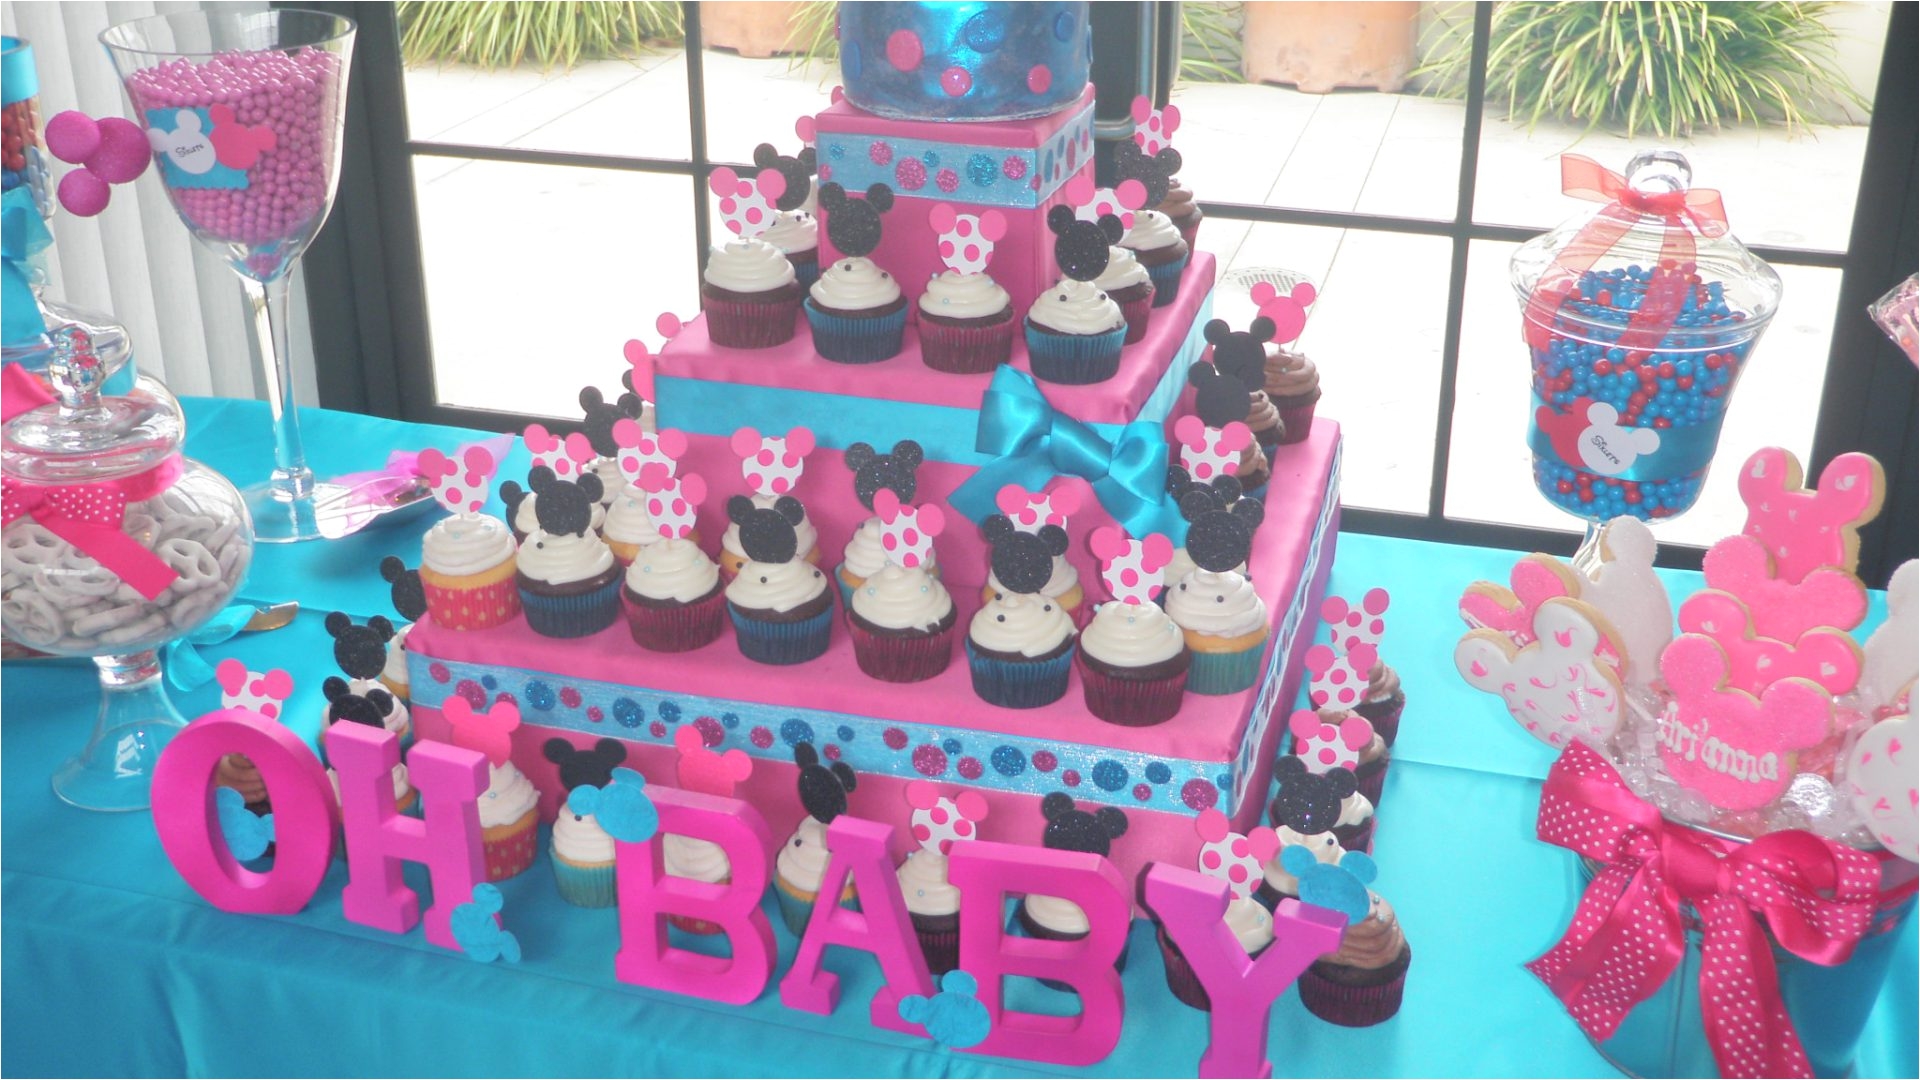 amazing shower ideas for baby girl diy babyl decorations visualize elegant decoration fantastic 1080x759 cute gift